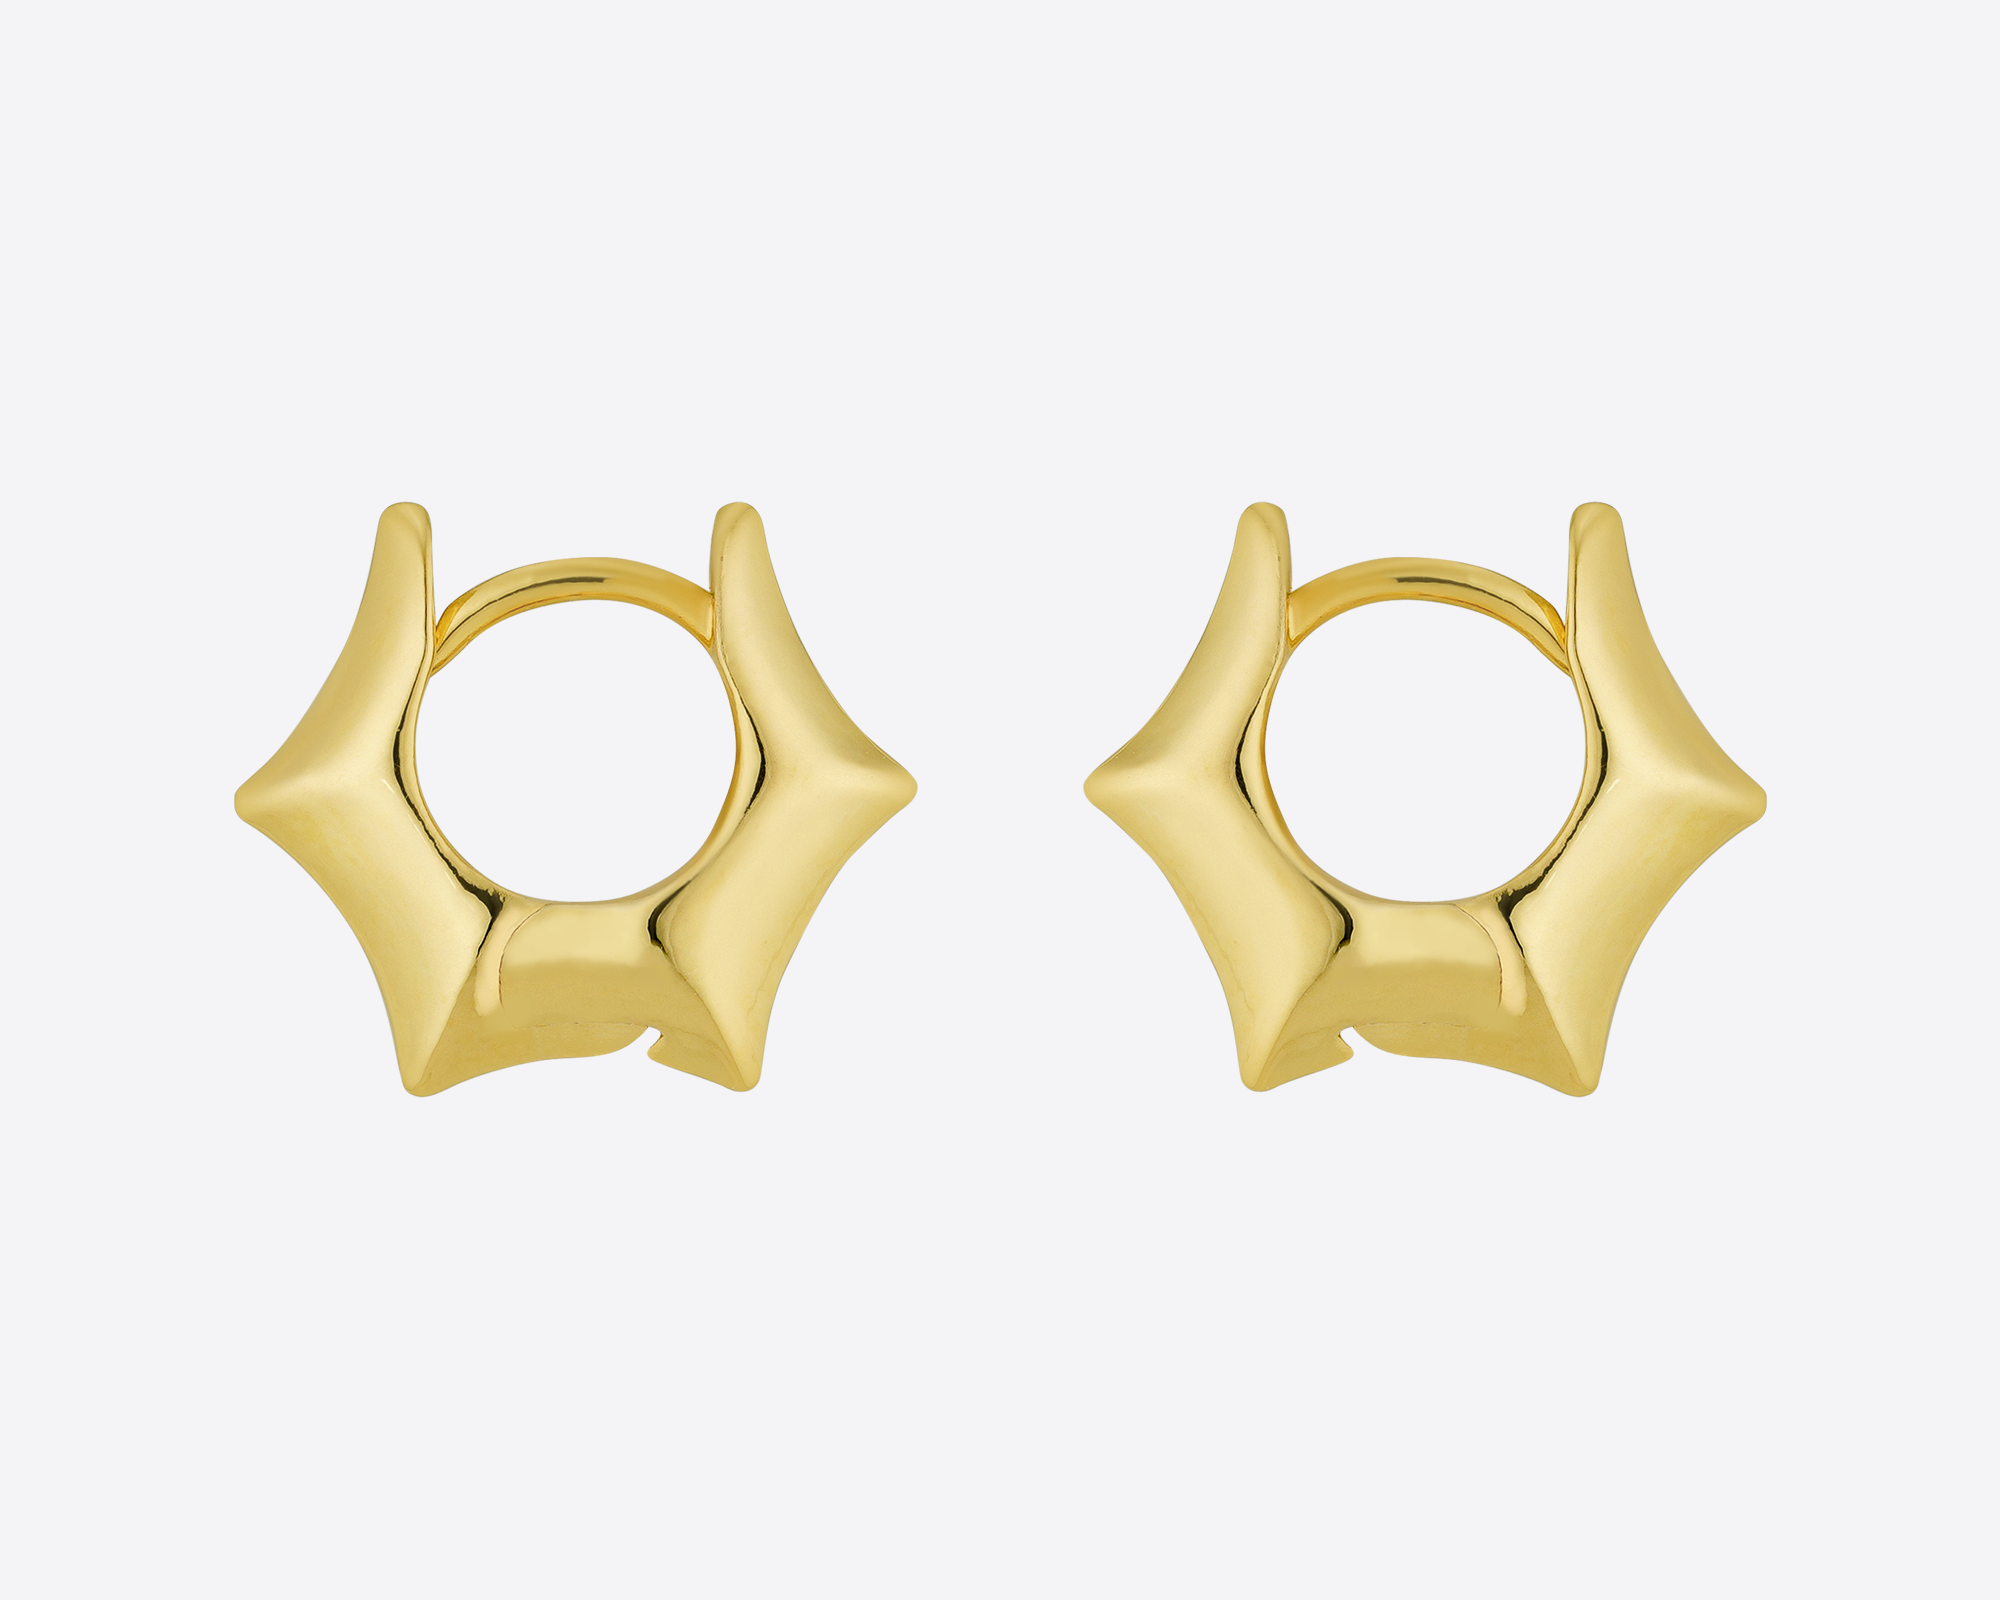 SALE NOW, Starfruit Earrings Gold